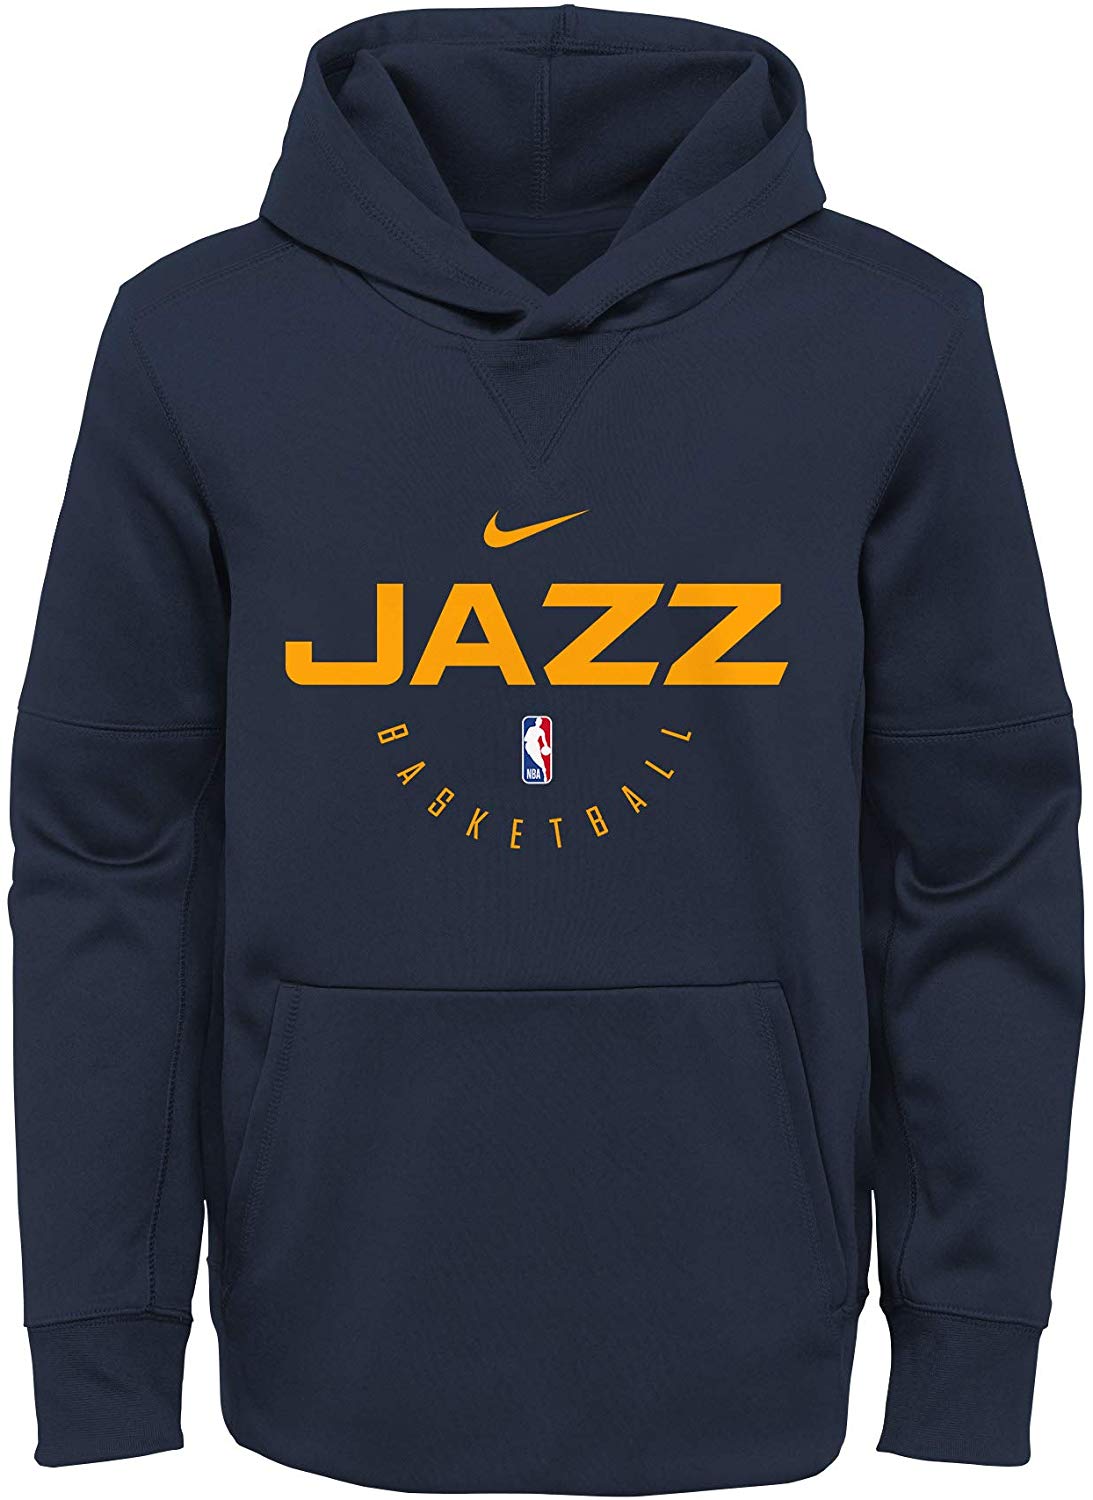 Utah Jazz Hoodies, Jazz Sweatshirts